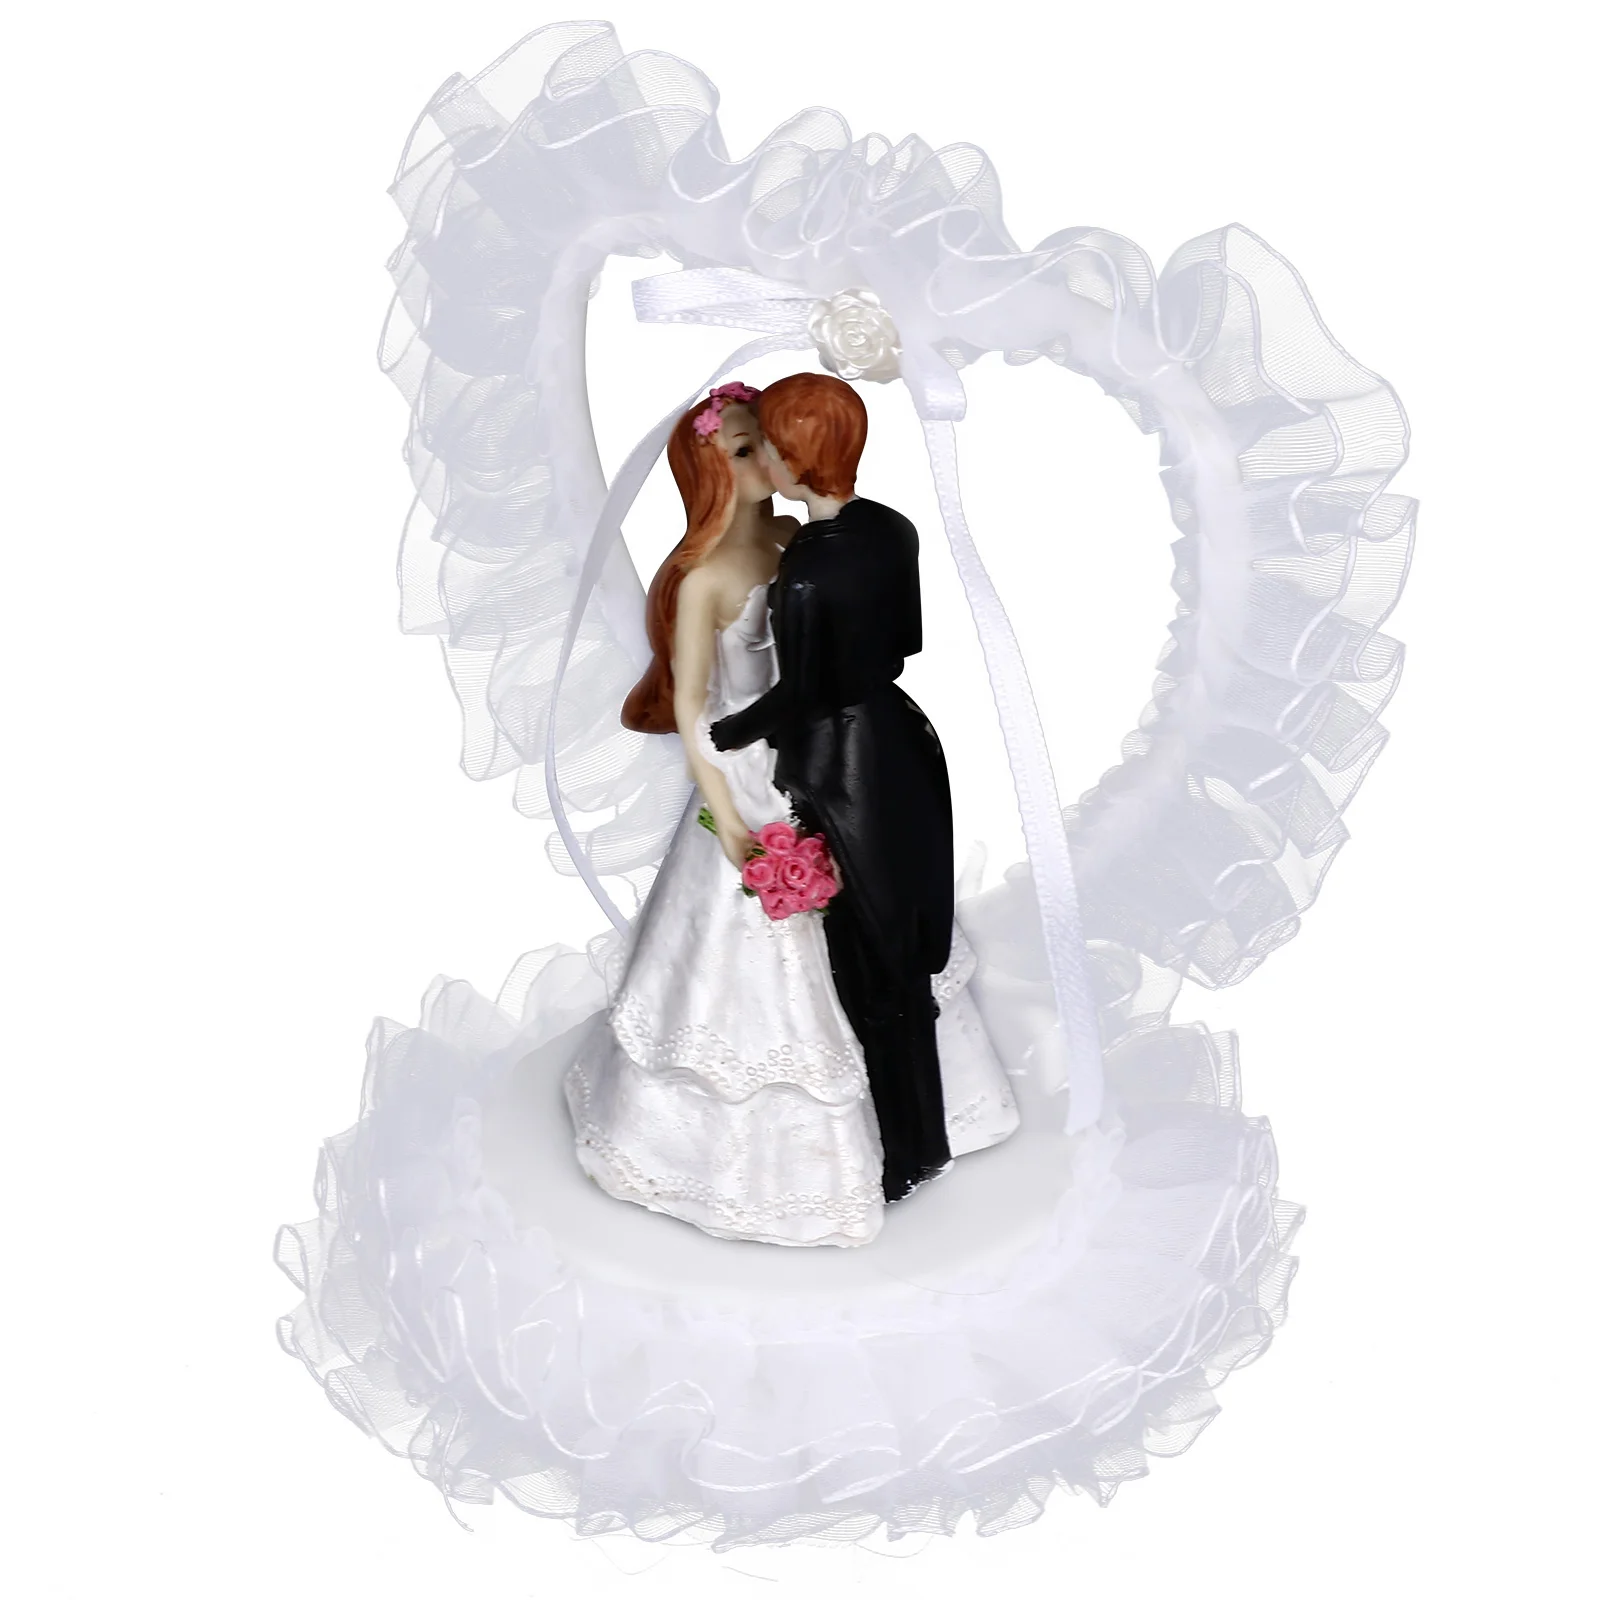 

Couple Cake Figurine Bride Groom Statue Spring Crafts Kids Inserted Cards Dancing Wedding Picks Topper Cupcake